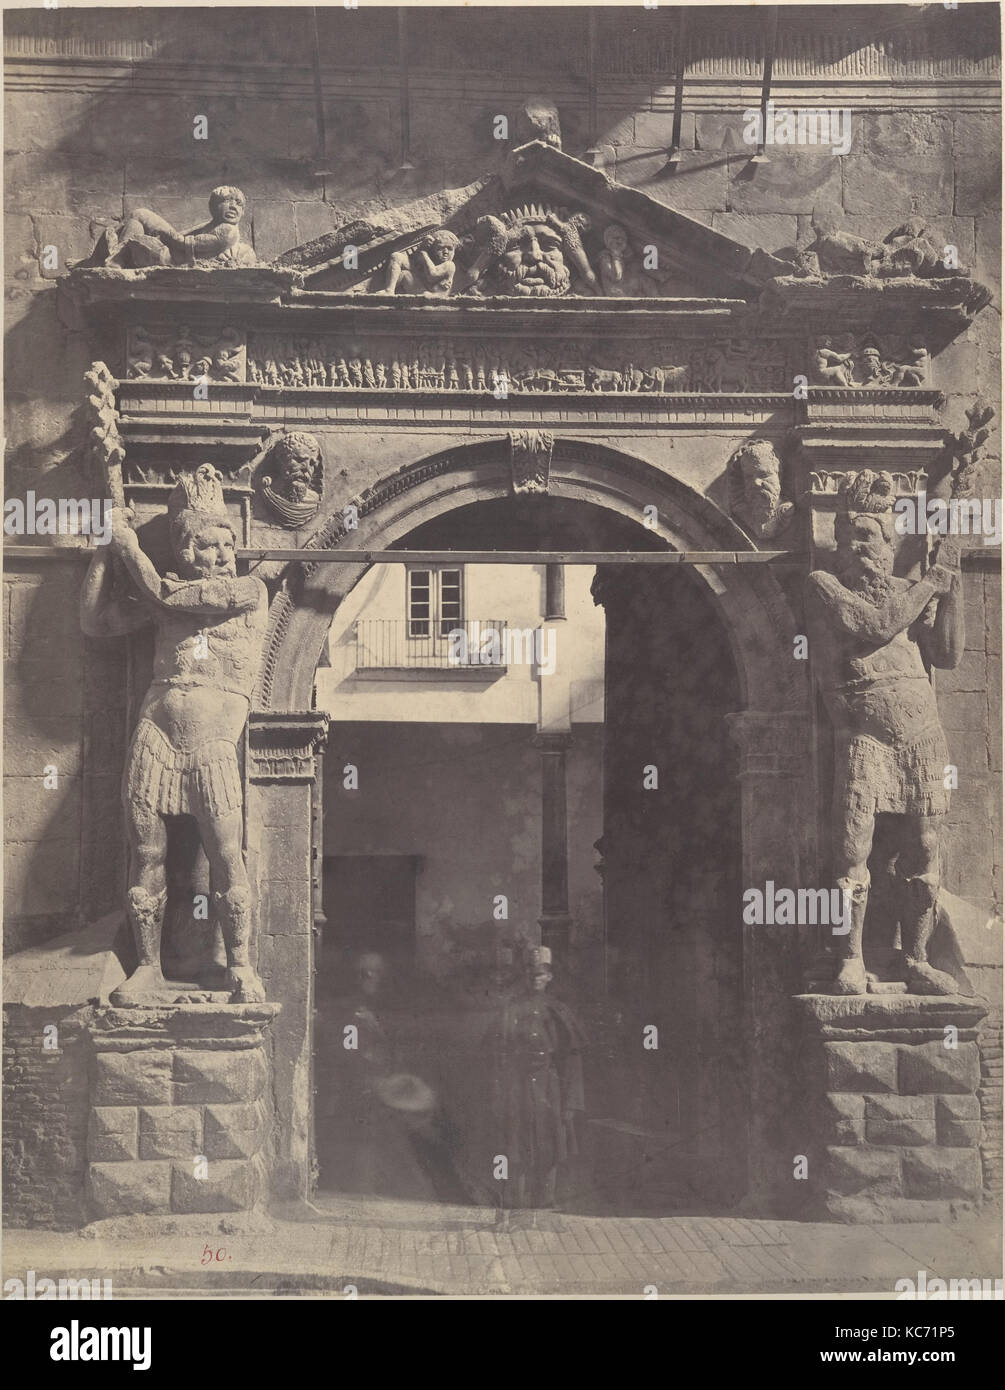 Zaragoza: Porta de los Gigantes, Charles Clifford, 1860 Stock Photo